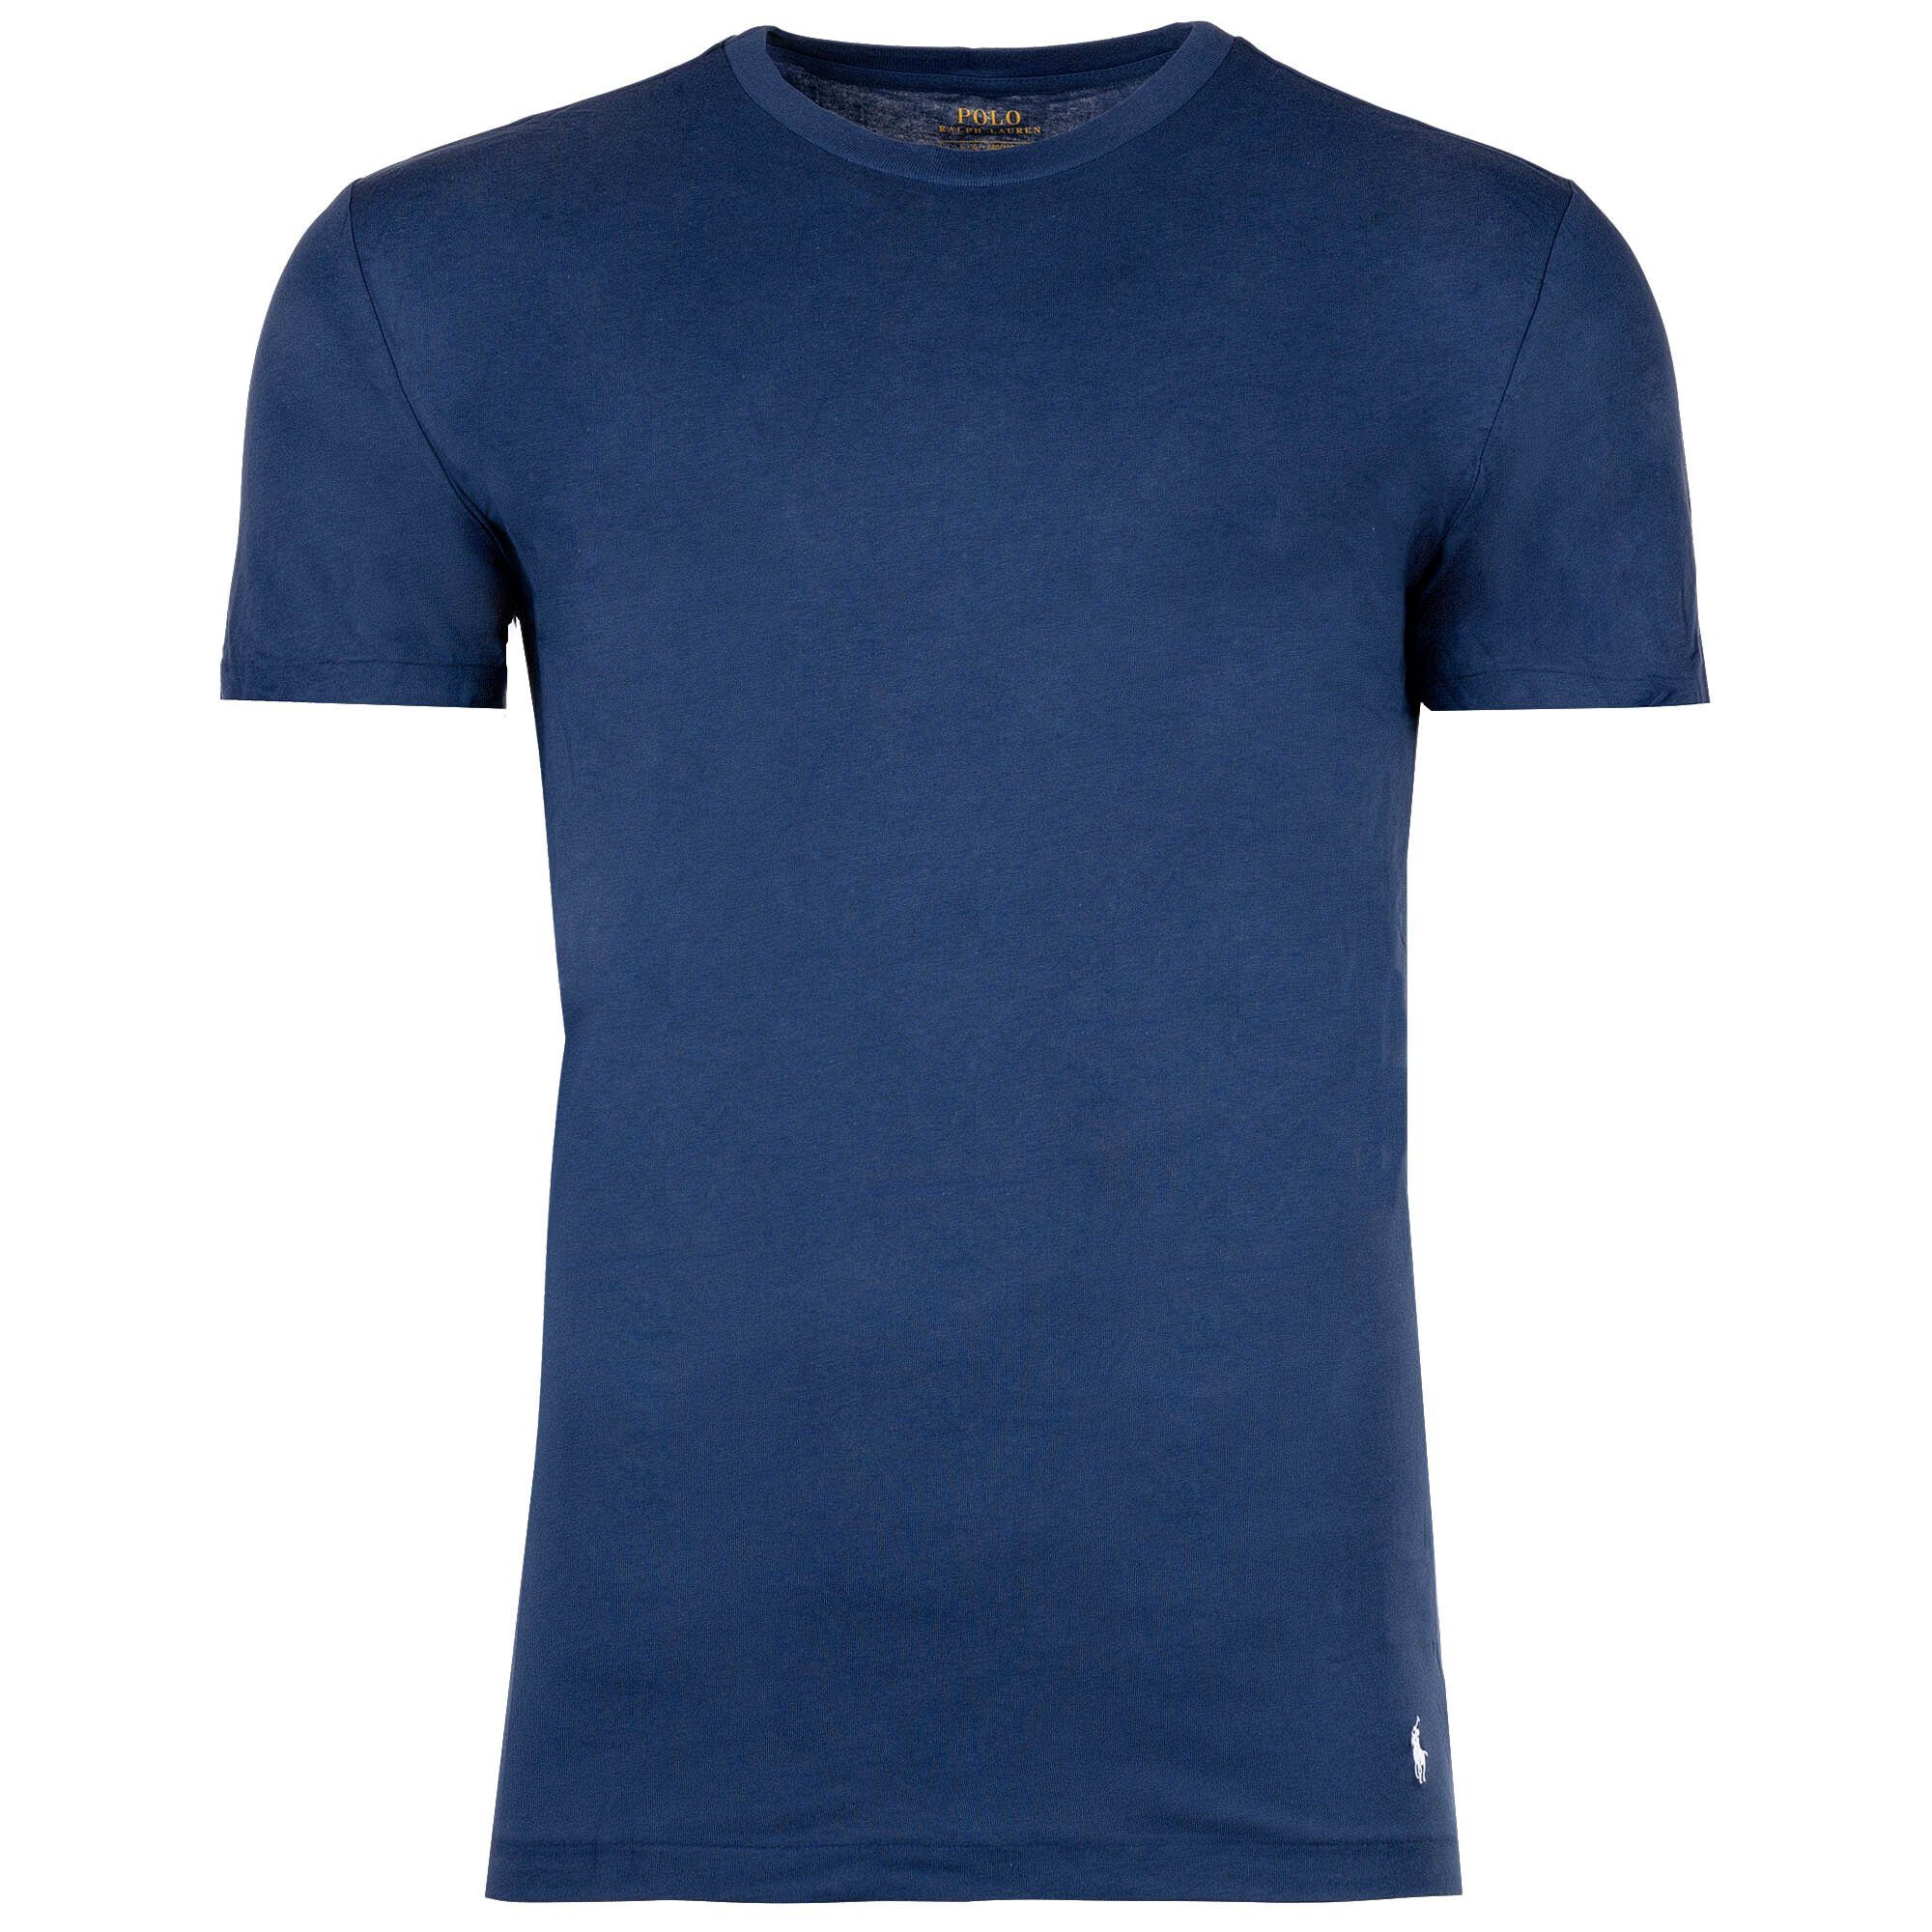 Polo Ralph 3-PACK-CREW Herren 3er CREW Pack Lauren Blau/Dunkelblau - T-Shirt T-Shirts